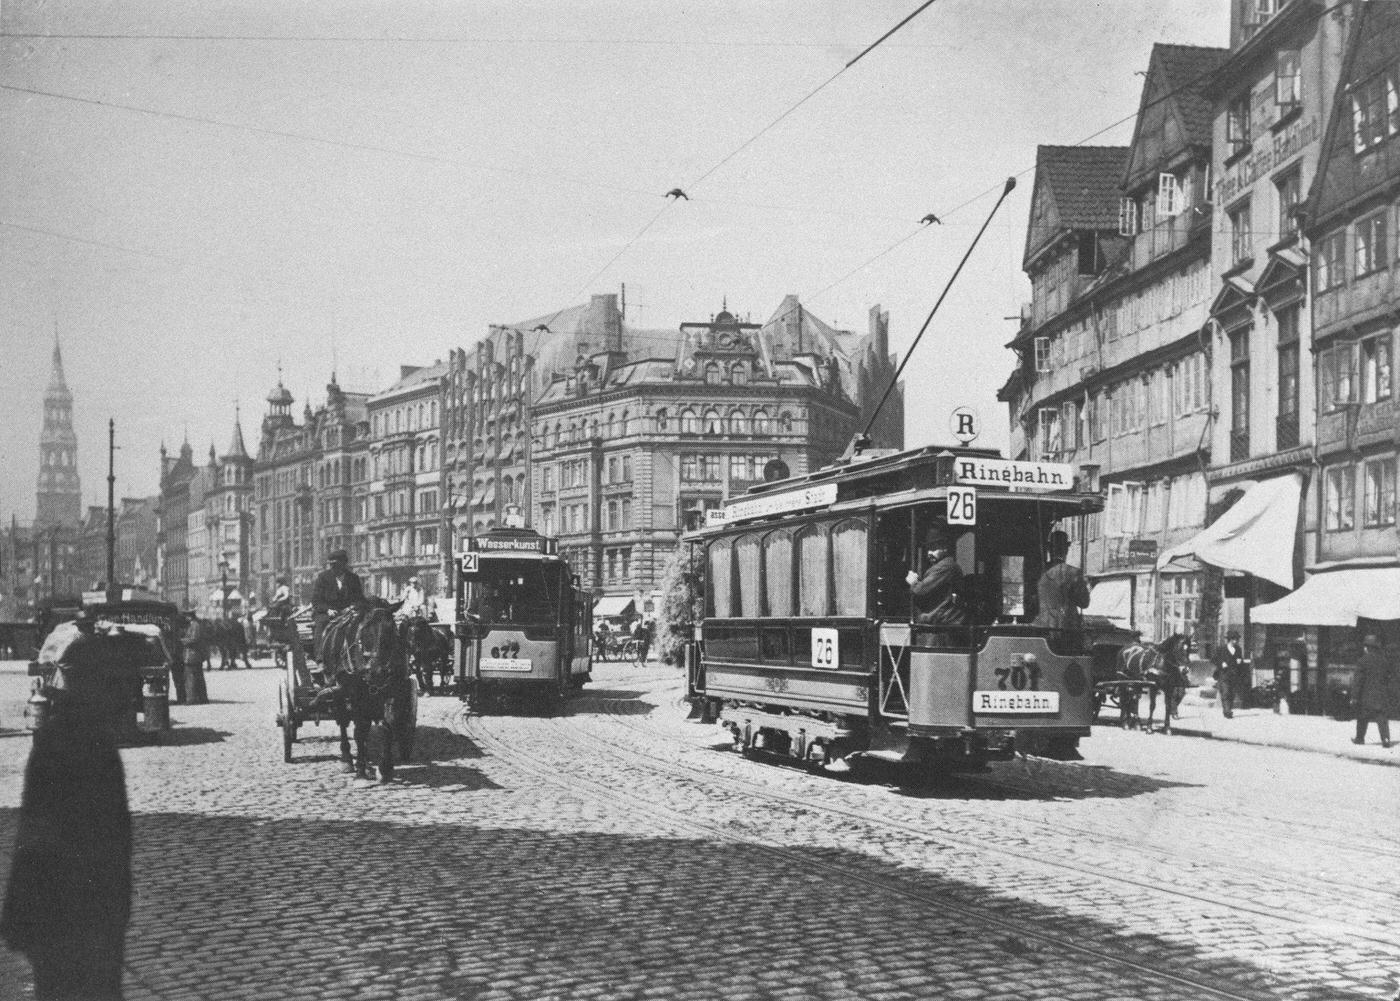 Hamburg: First Electric Tram on Line 26, 1894